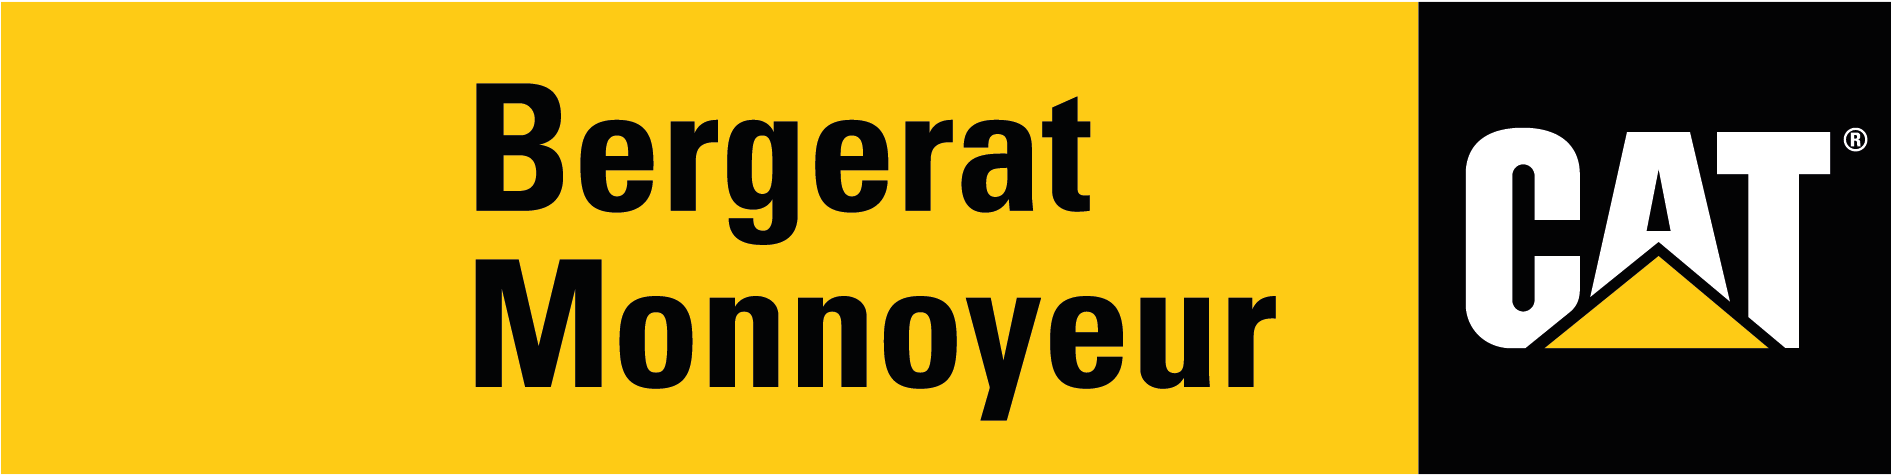 Bergerat_Monnoyeur